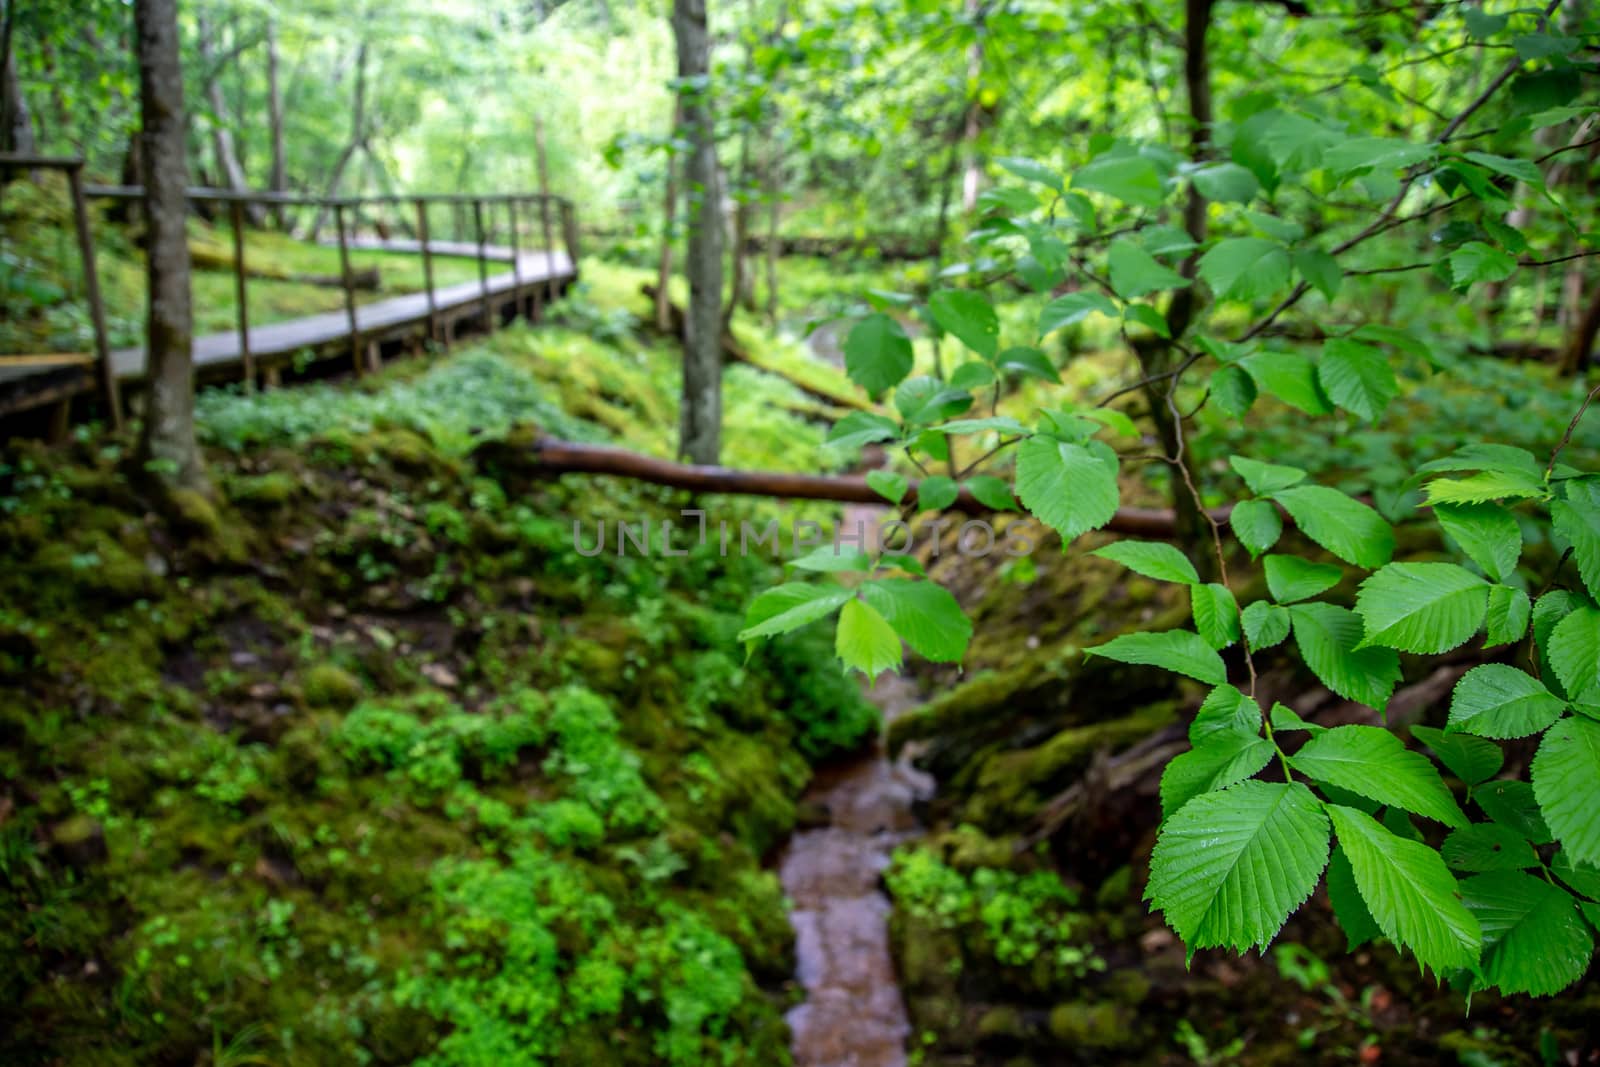 Wooden bridge in green forest. Beautiful green leaves on trees in forest and wooden bridge in Latvia.